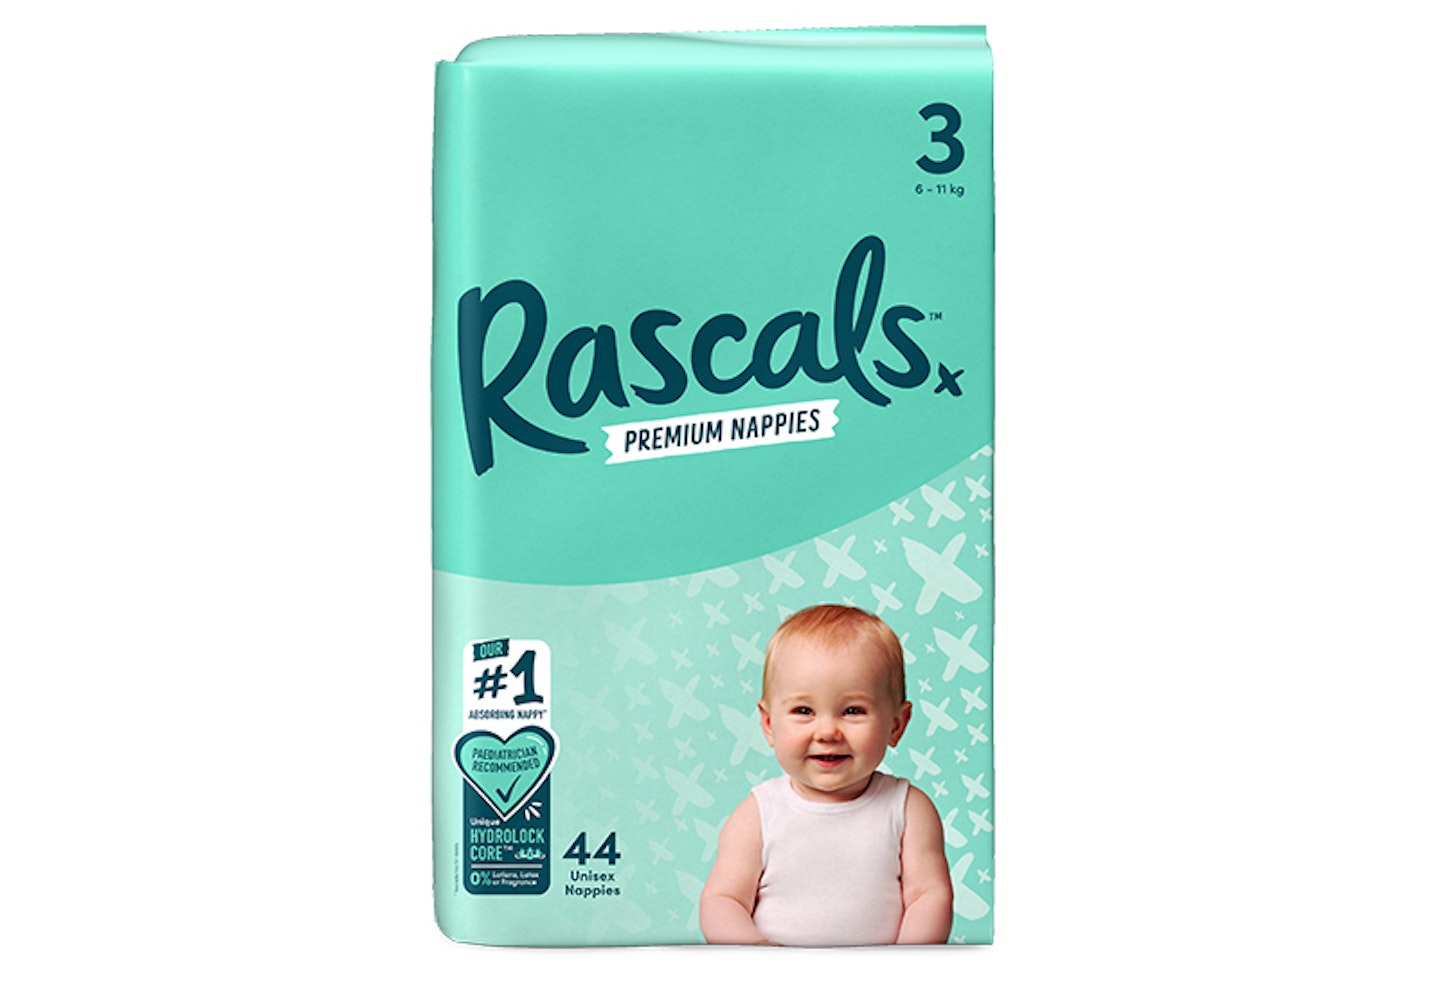 rascals Image 4 copy